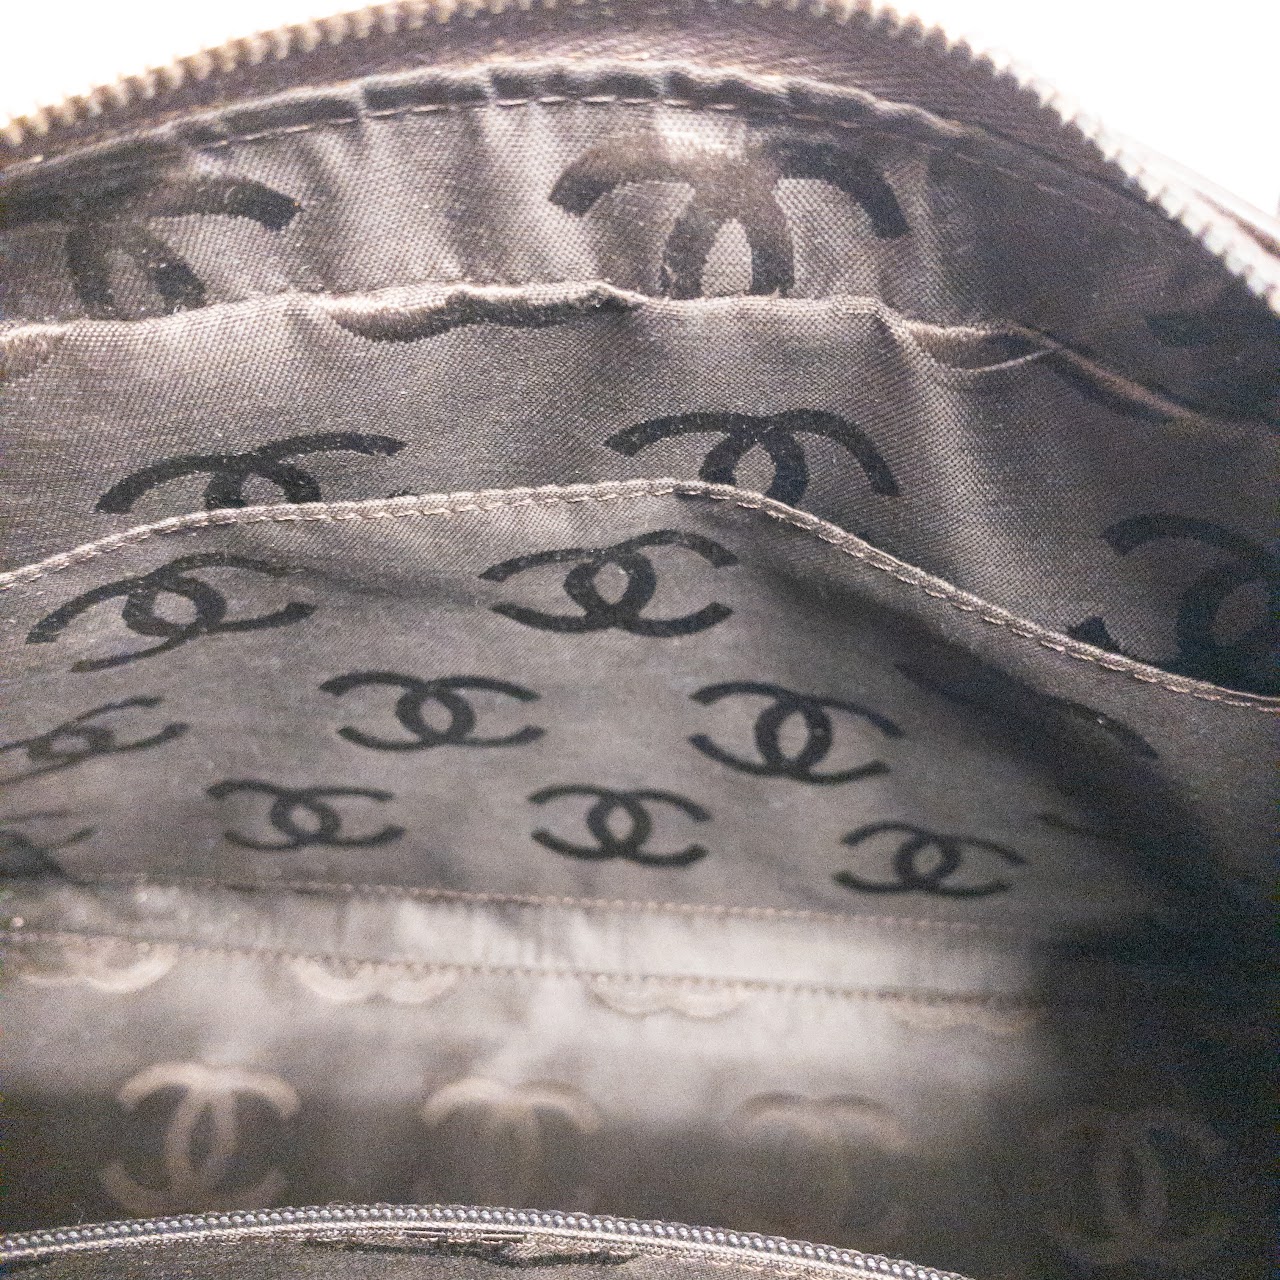 Chanel Wild Stitch Handbag